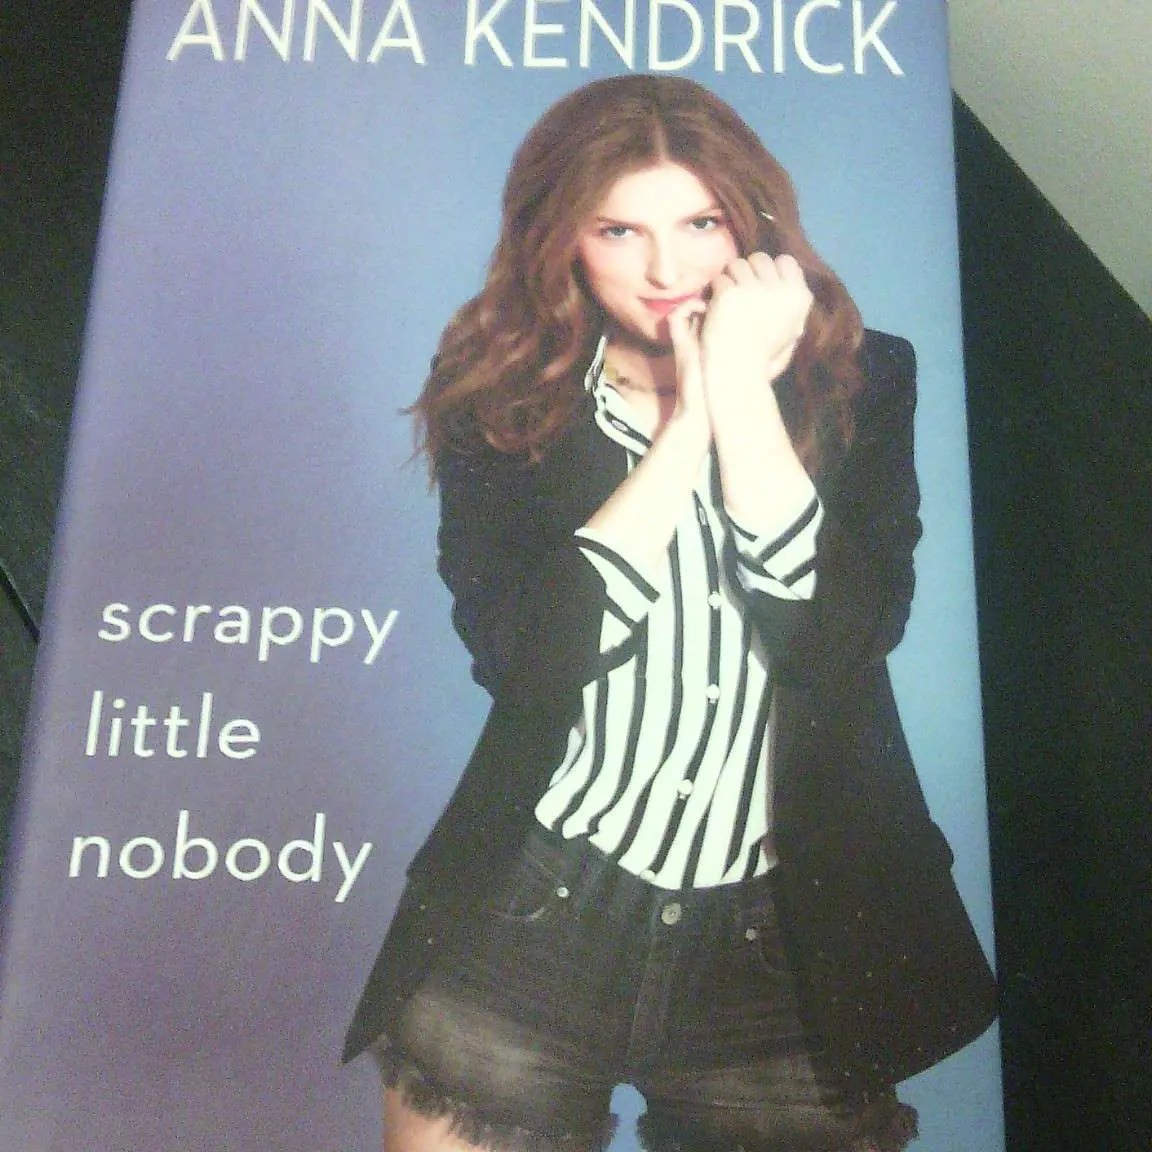 Book - Anna Kendrick, scrappy little nobody photo 1